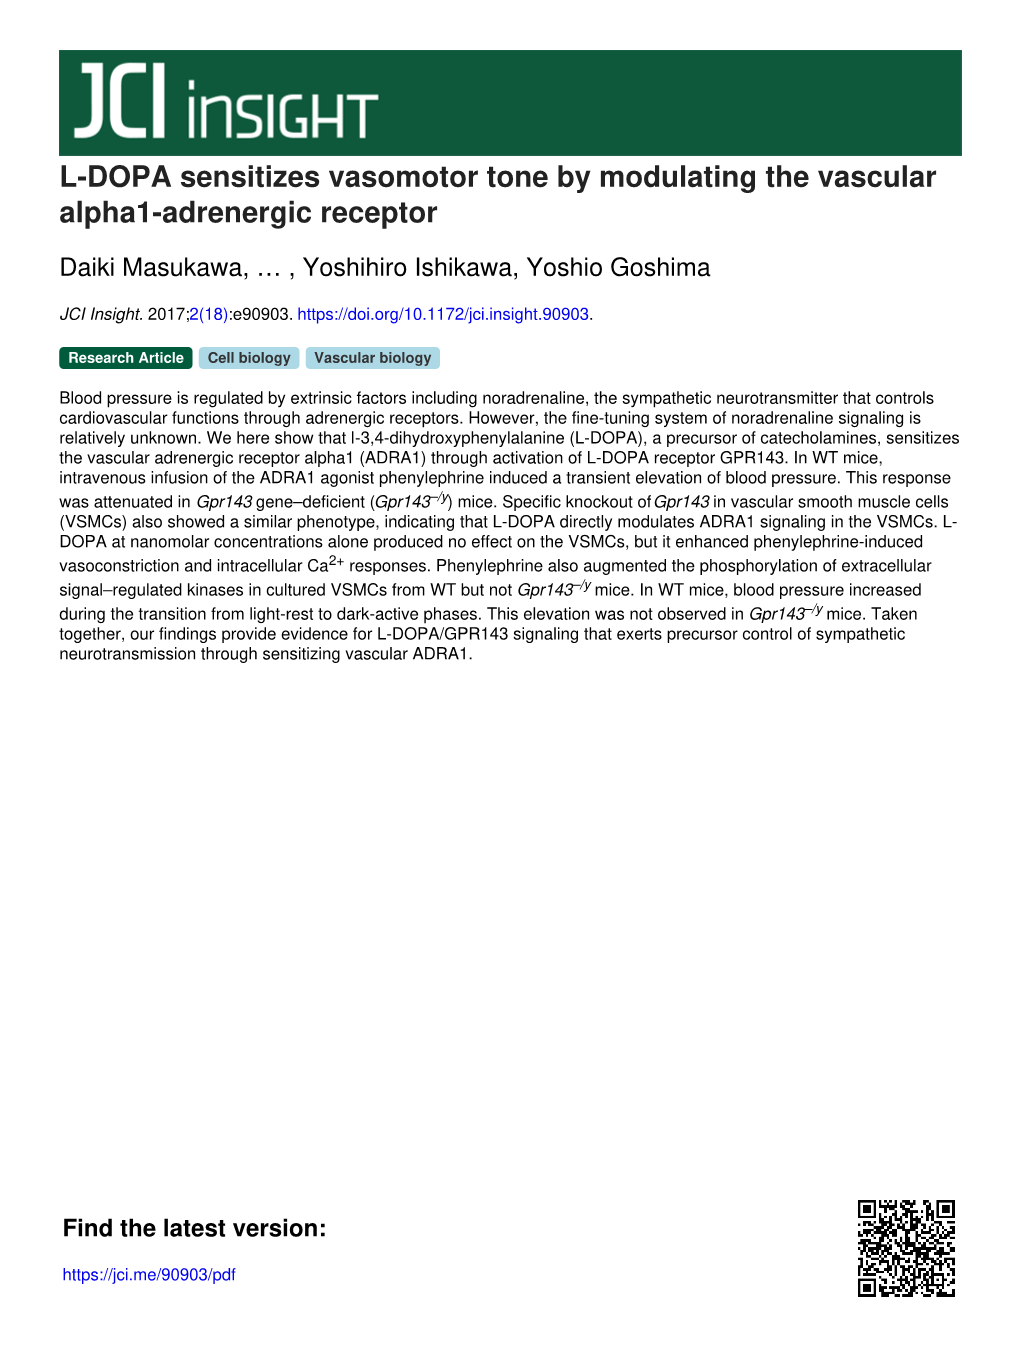 L-DOPA Sensitizes Vasomotor Tone by Modulating the Vascular Alpha1-Adrenergic Receptor